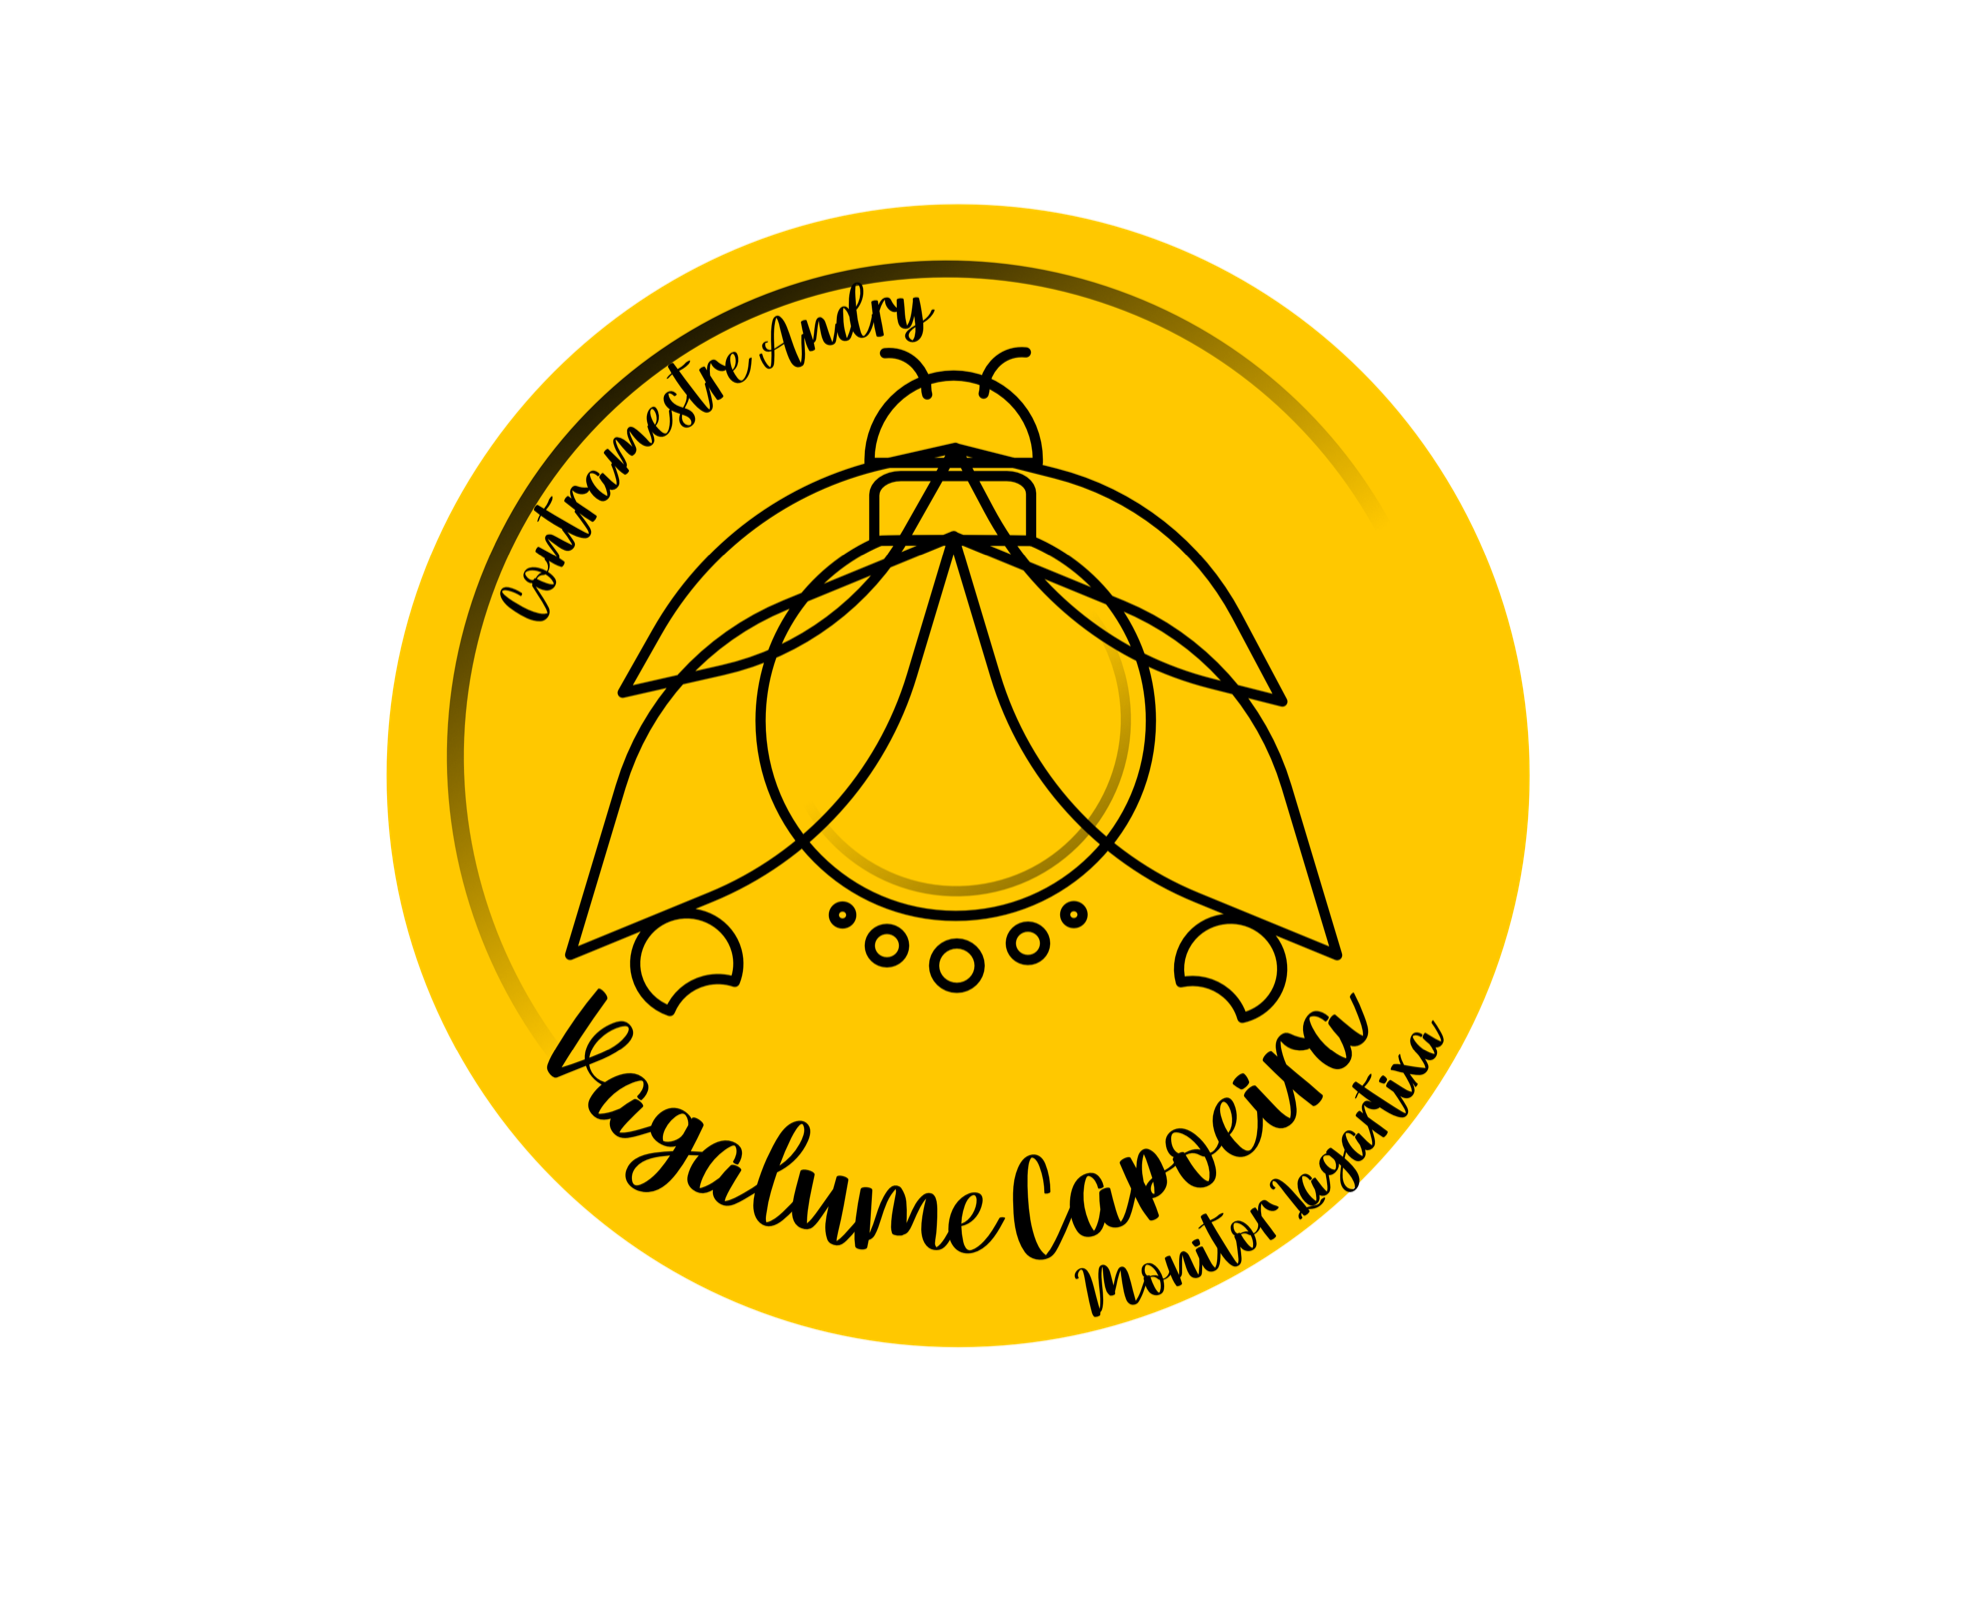 logo of Association Capoeira Yverdon